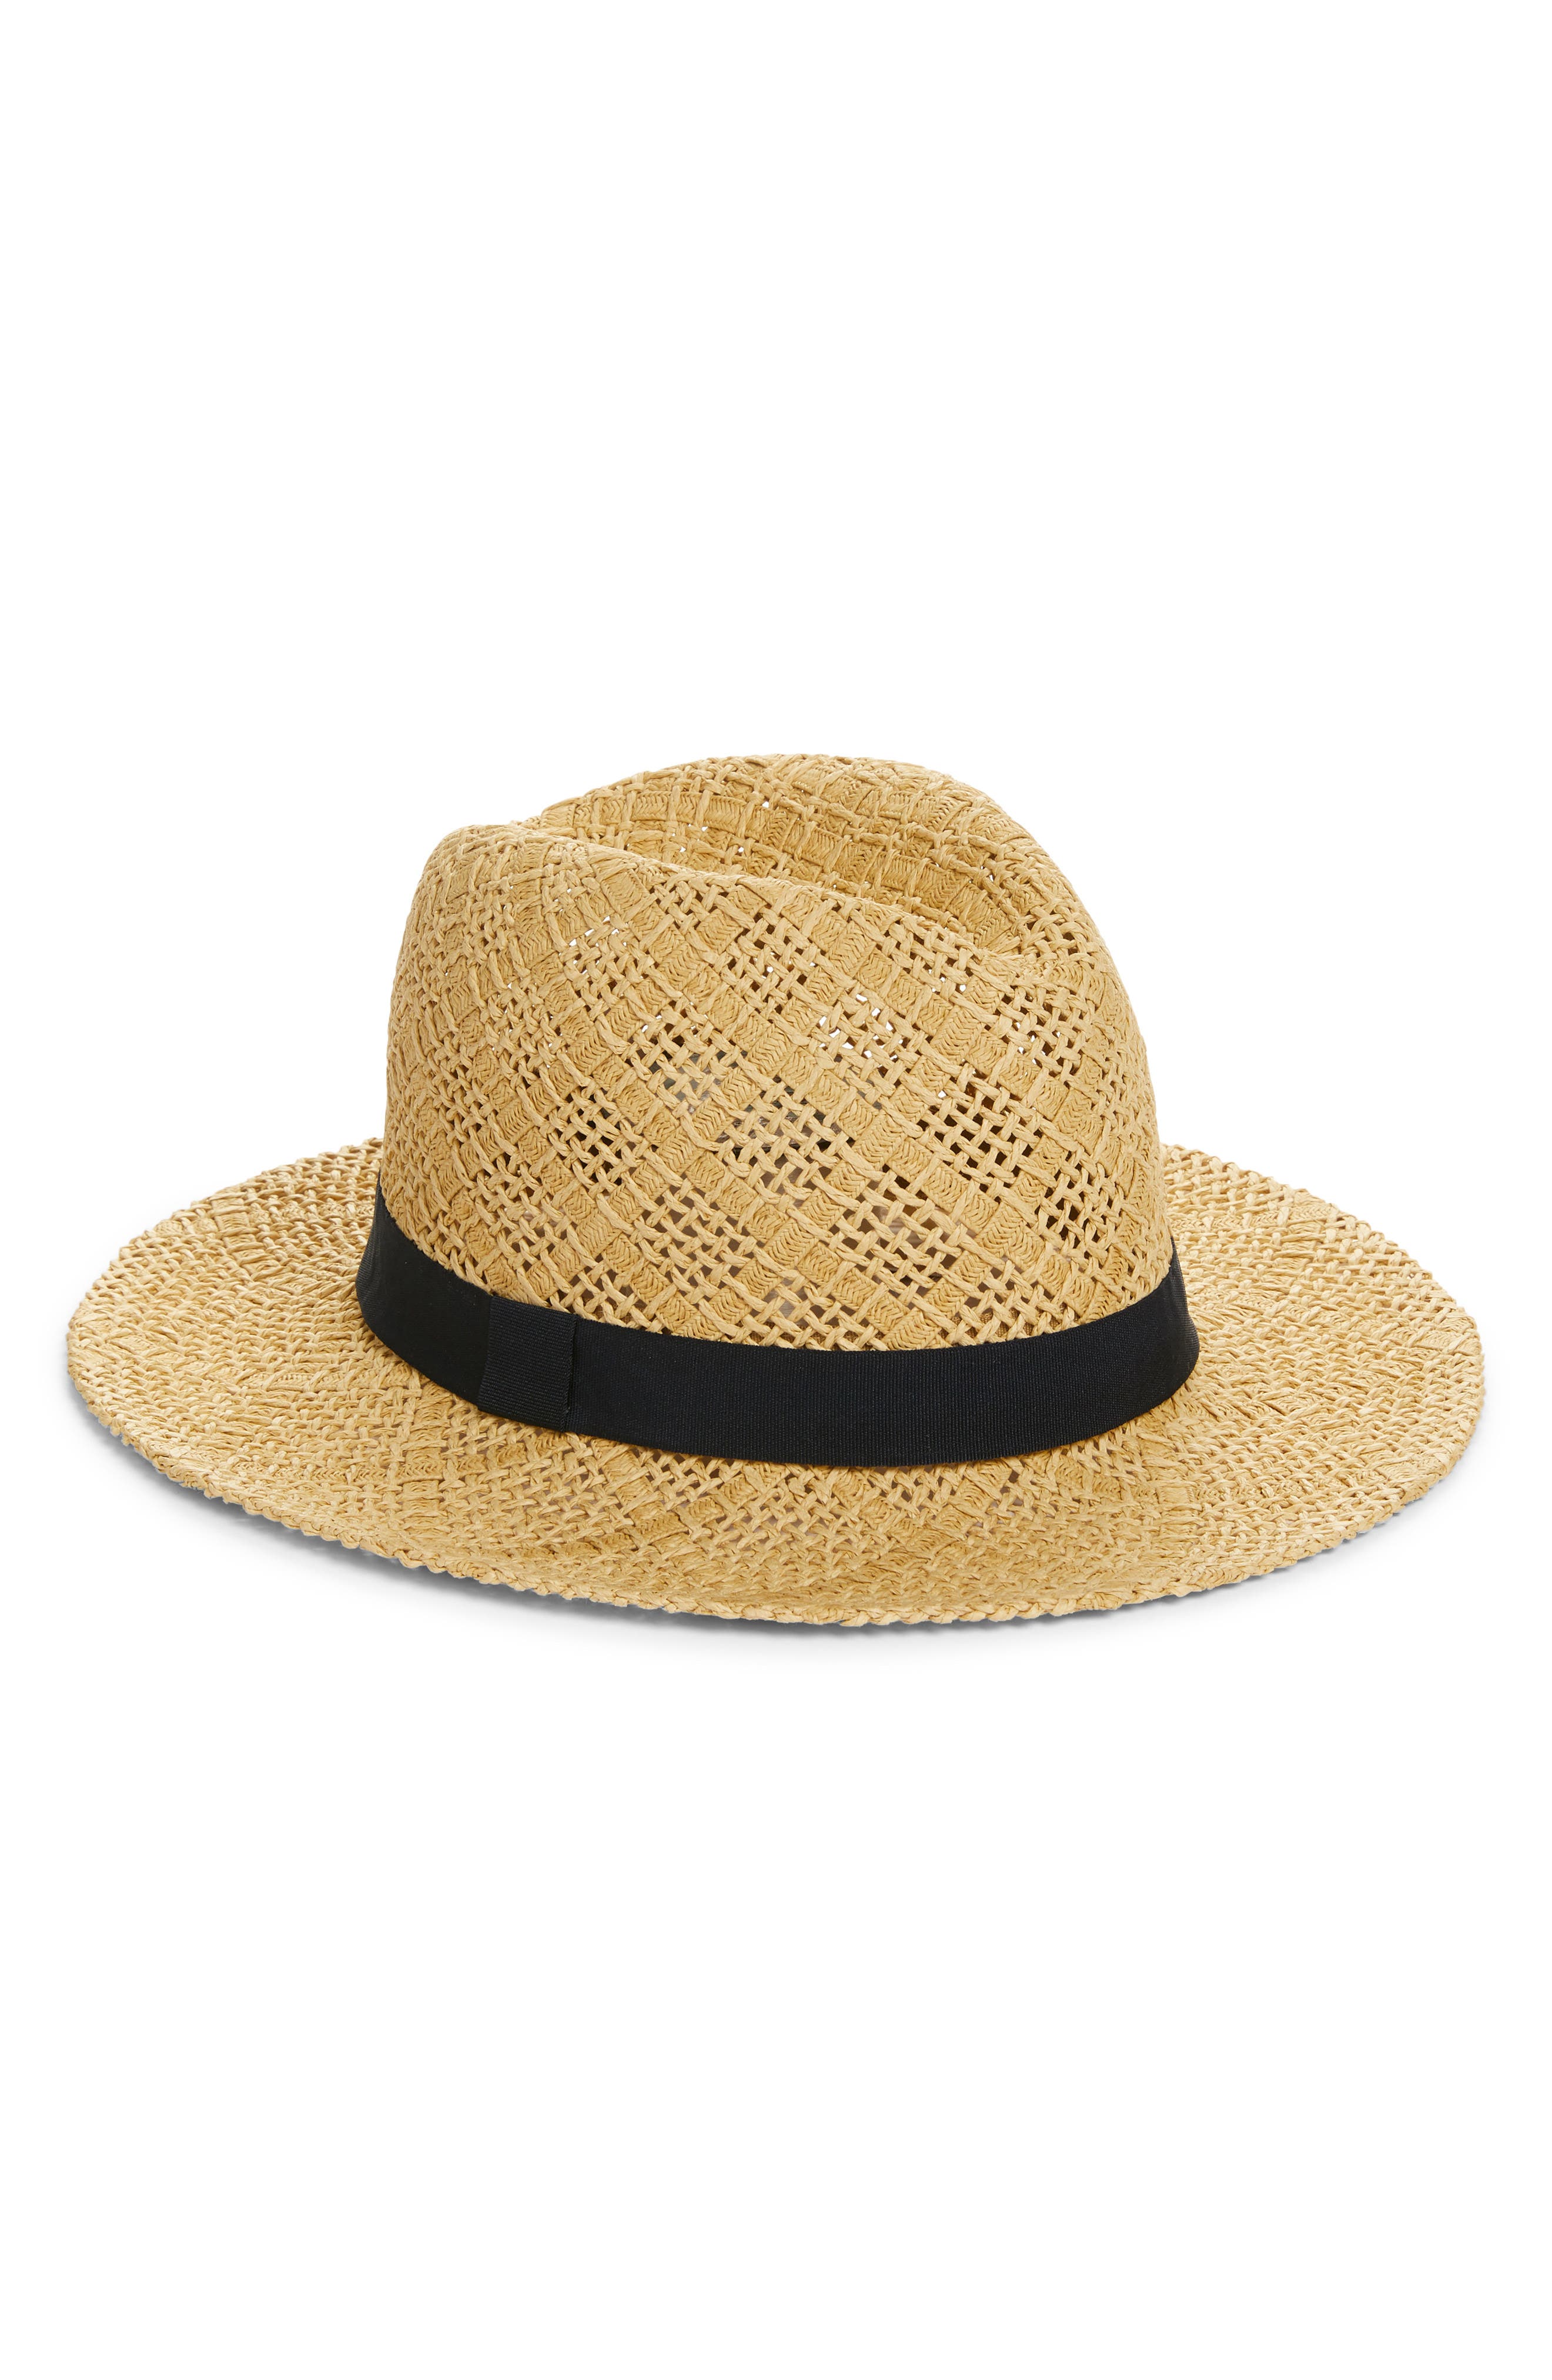 Halogen Novelty Weave Panama Hat In Beige Light Combo